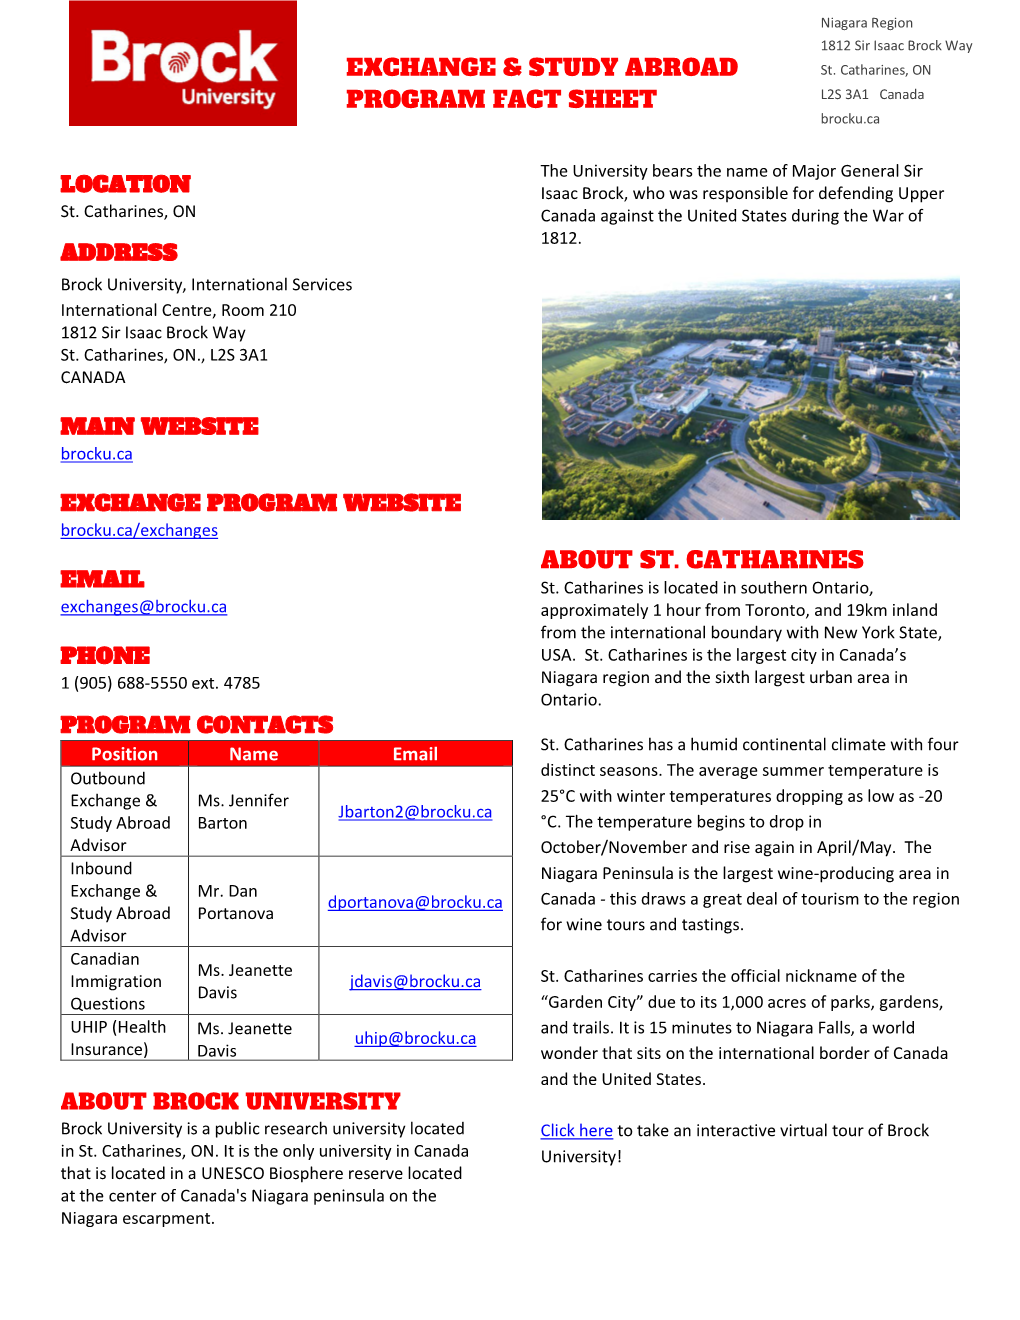 Exchange & Study Abroad Program Fact Sheet